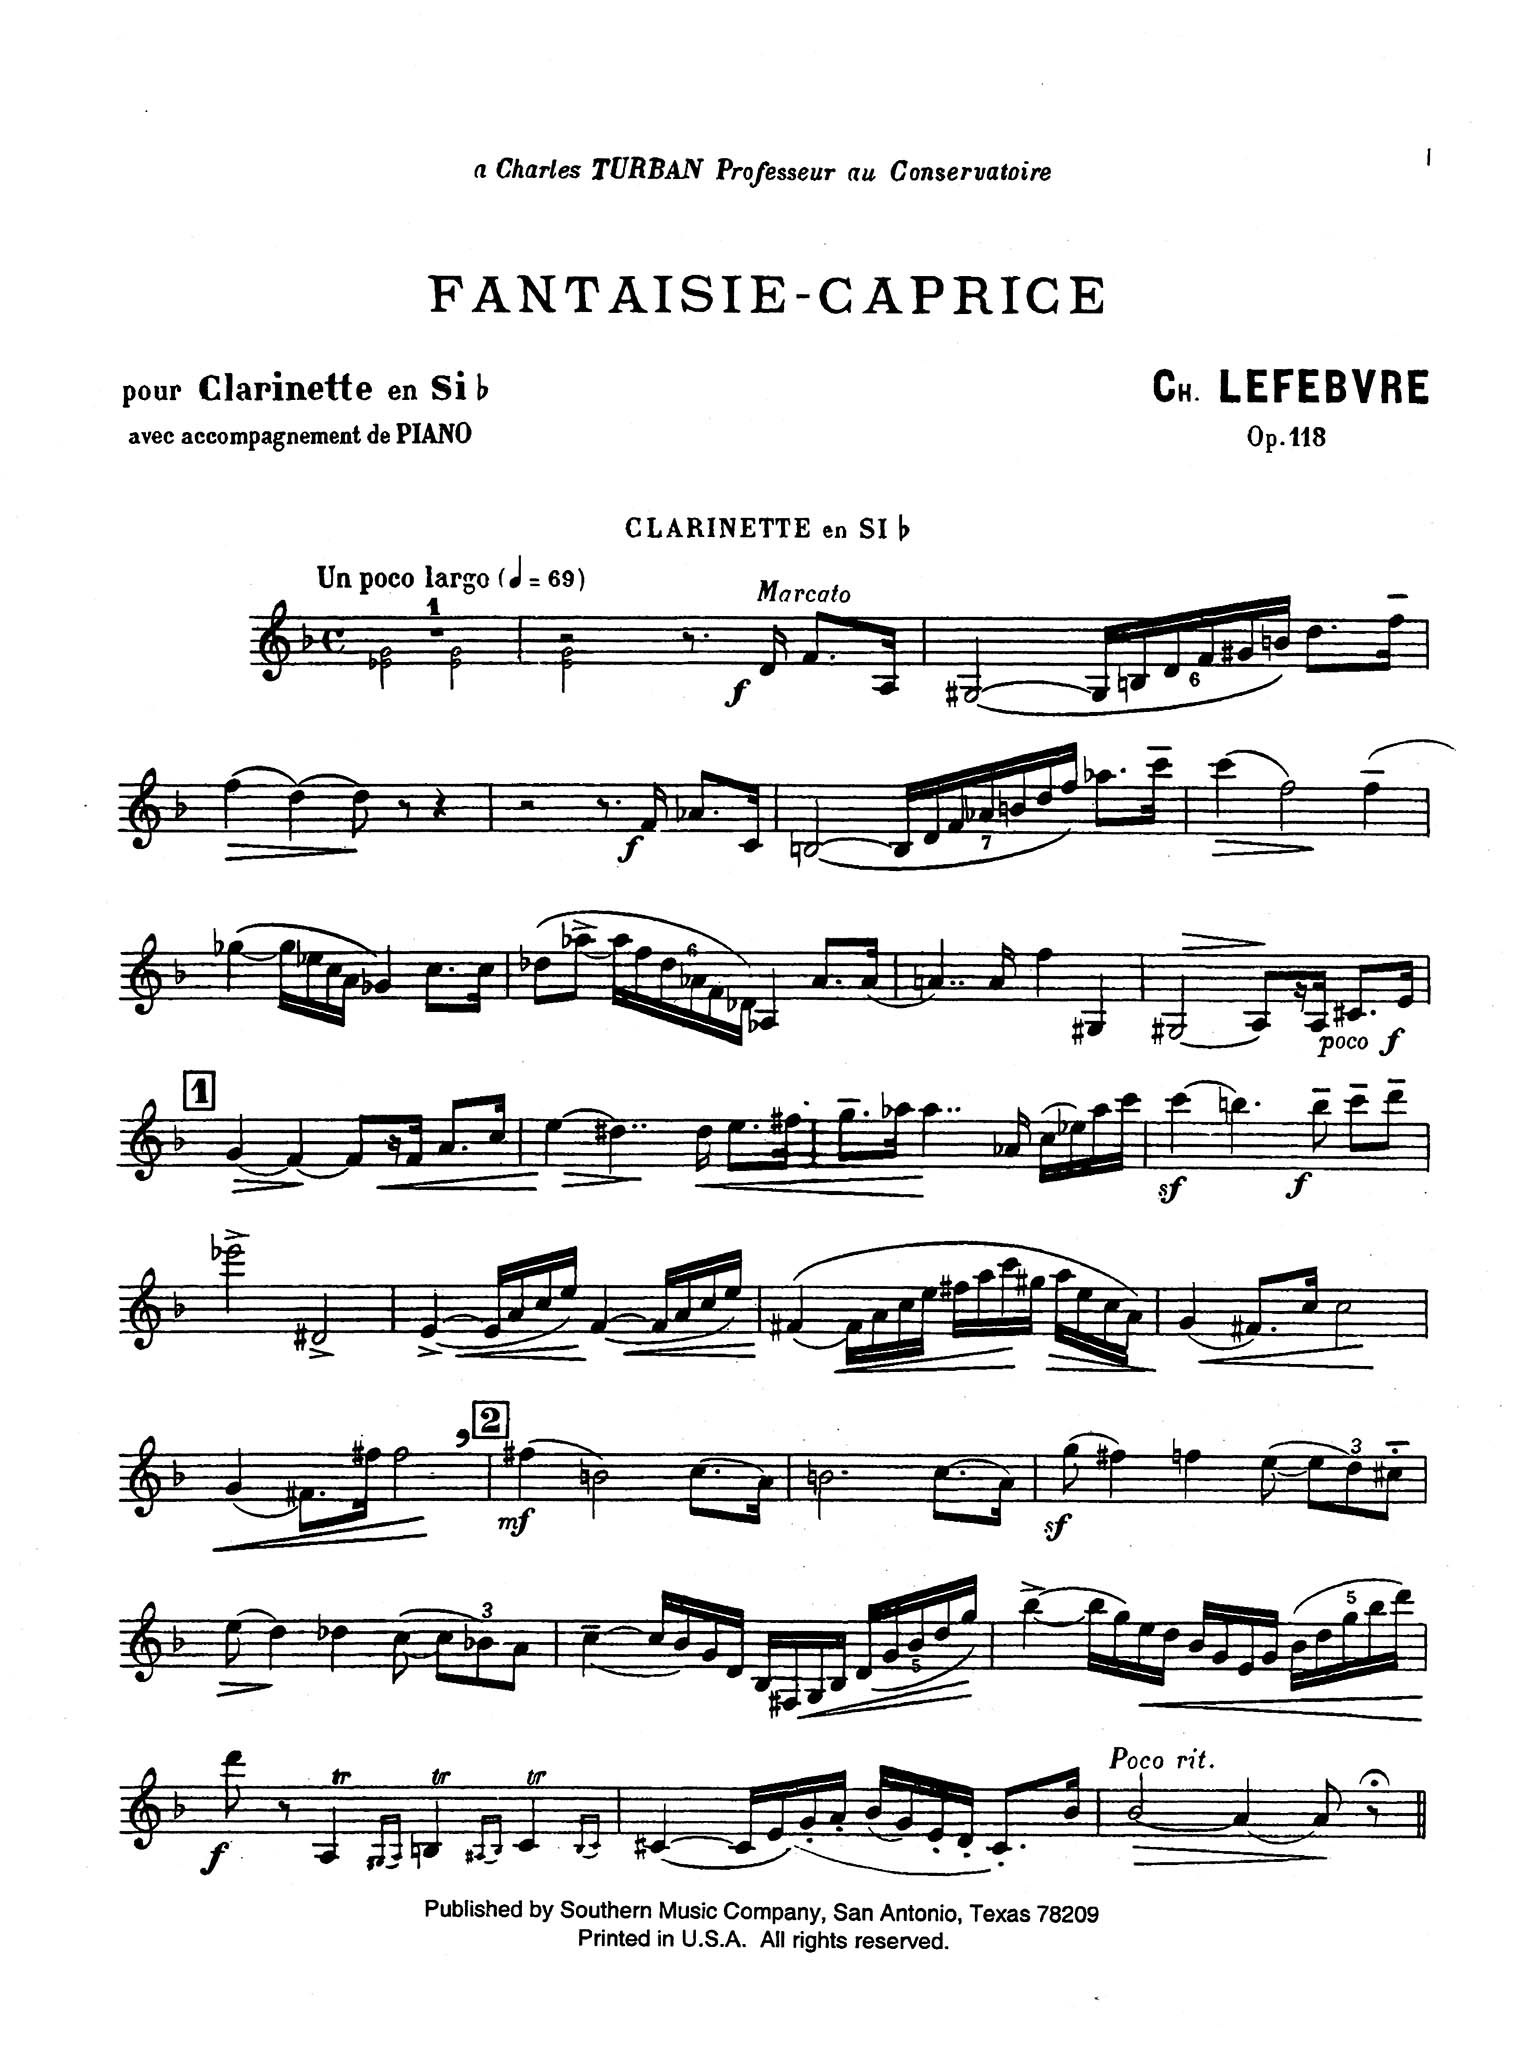 Fantaisie-caprice, Op. 118 Clarinet part